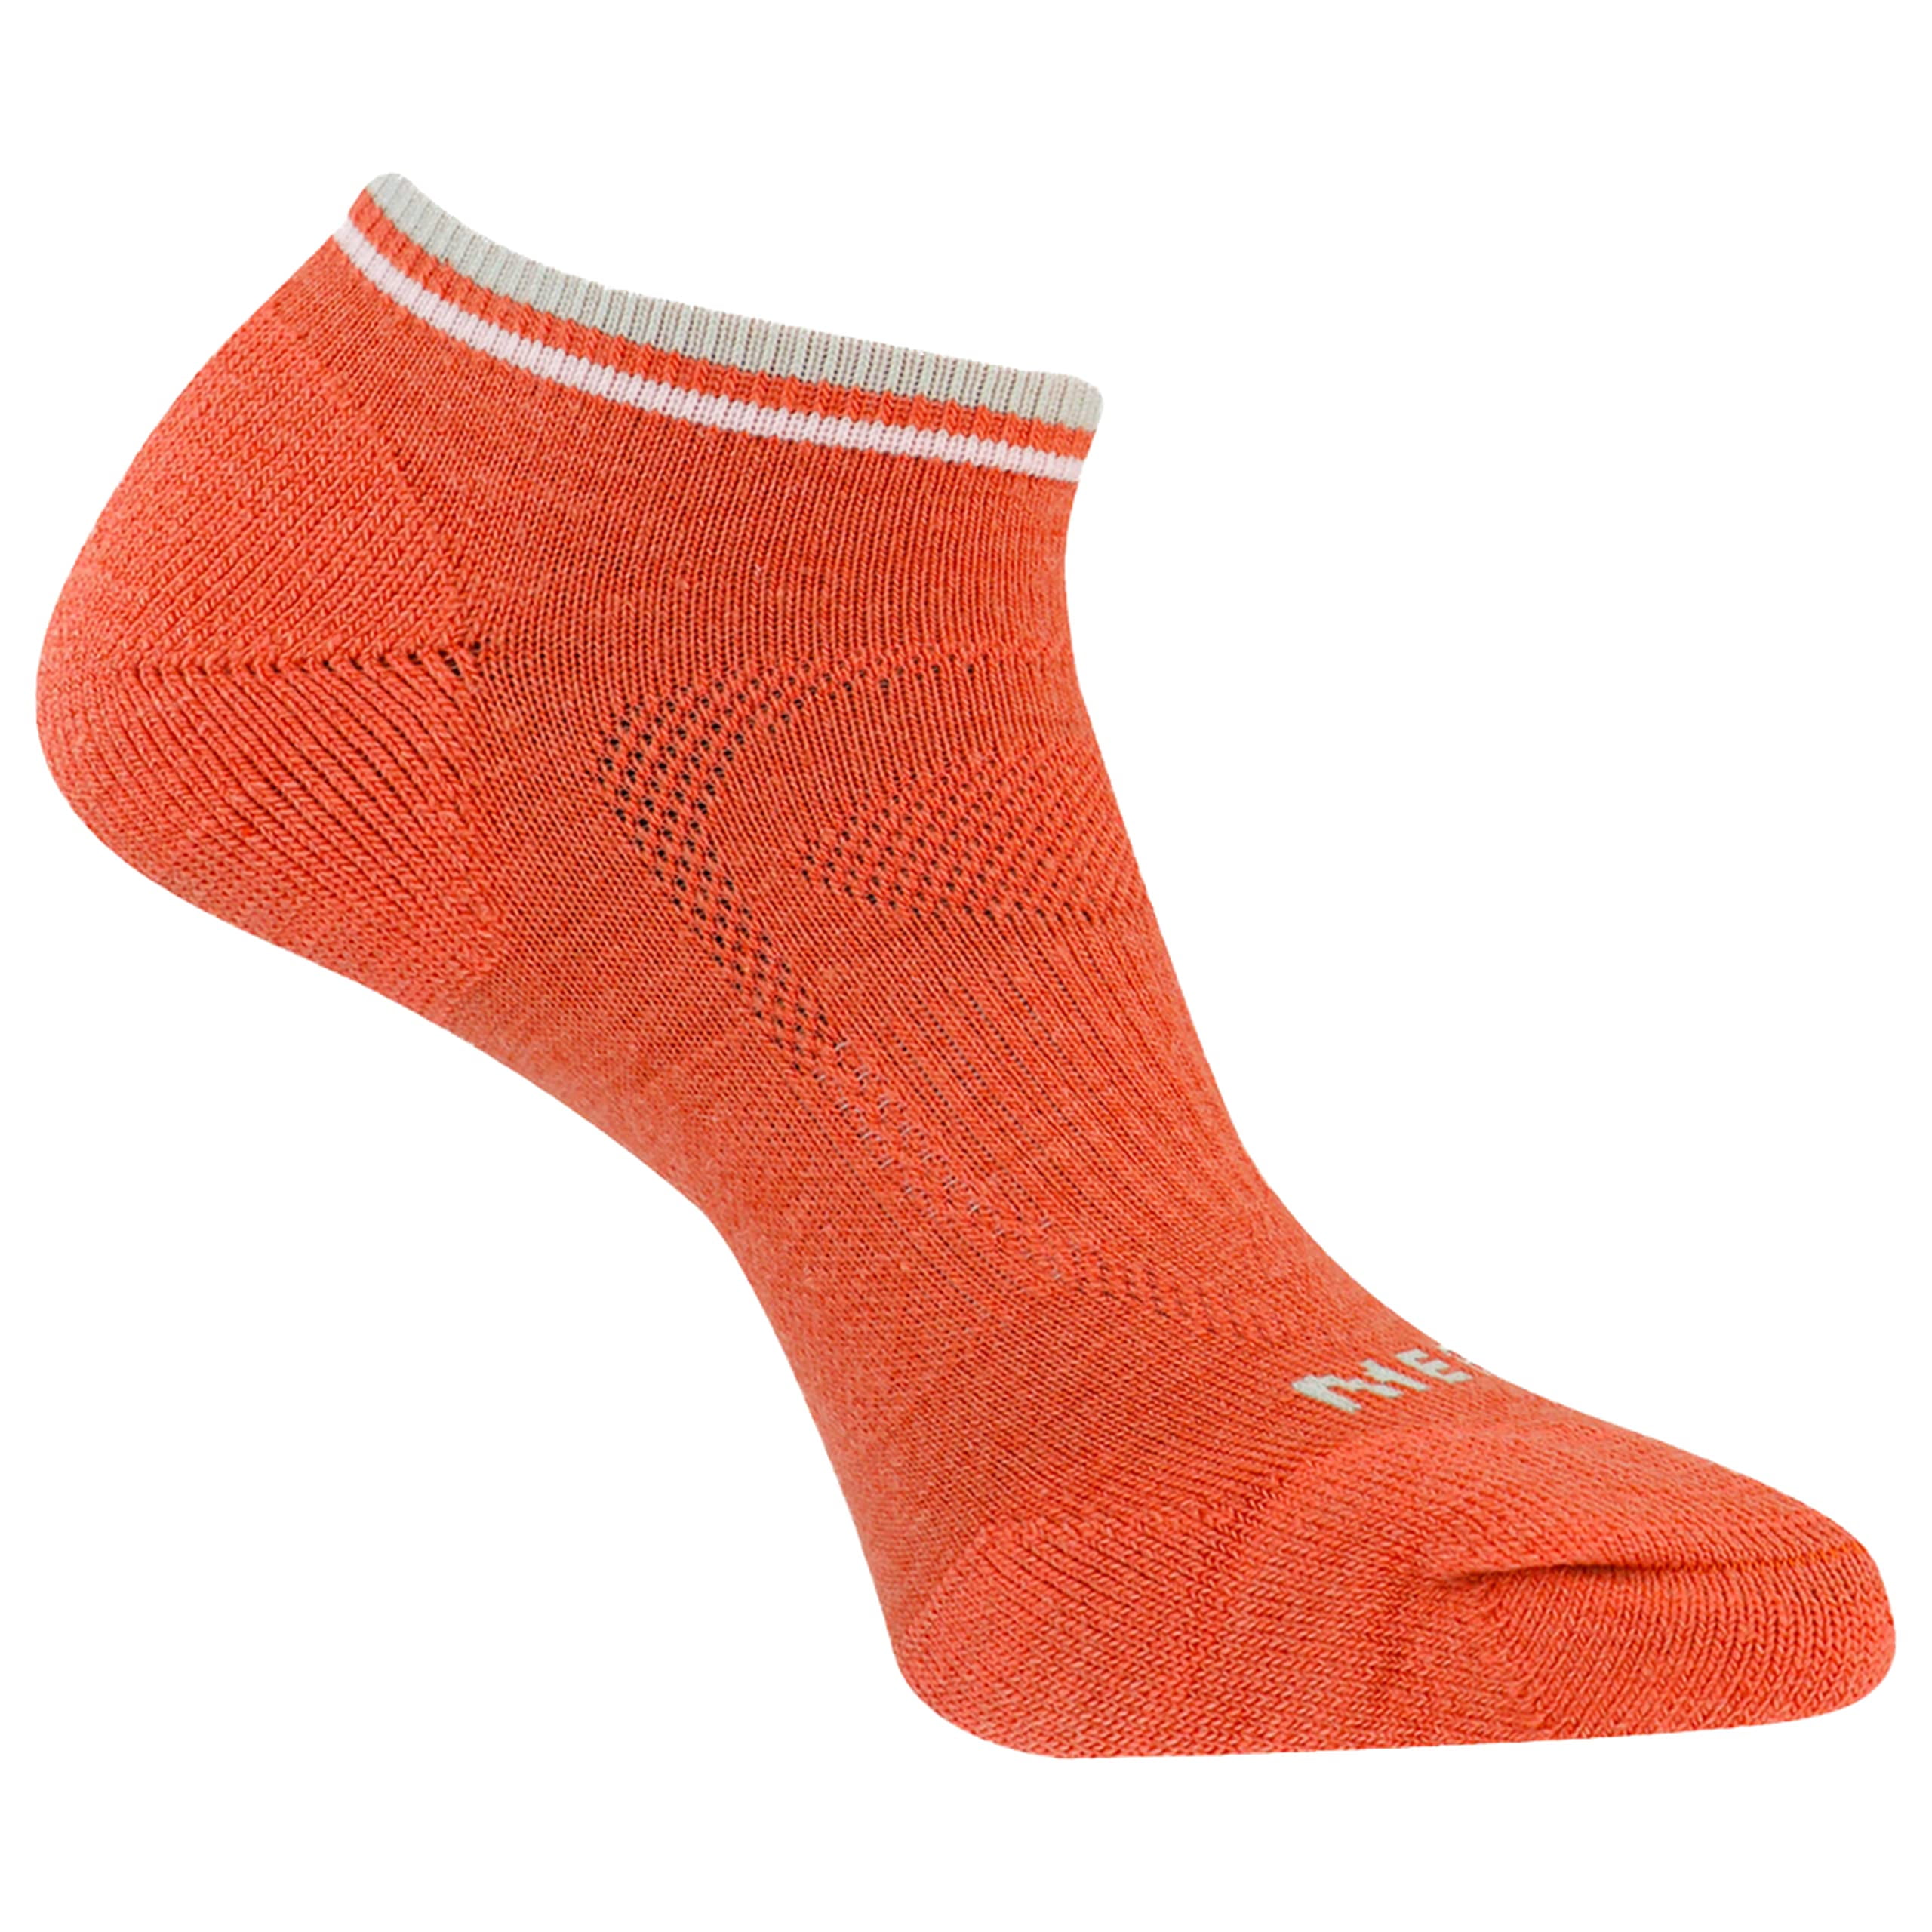 Merrell Men's and Women's Merino Wool Hiking Low Cut Sock with ...